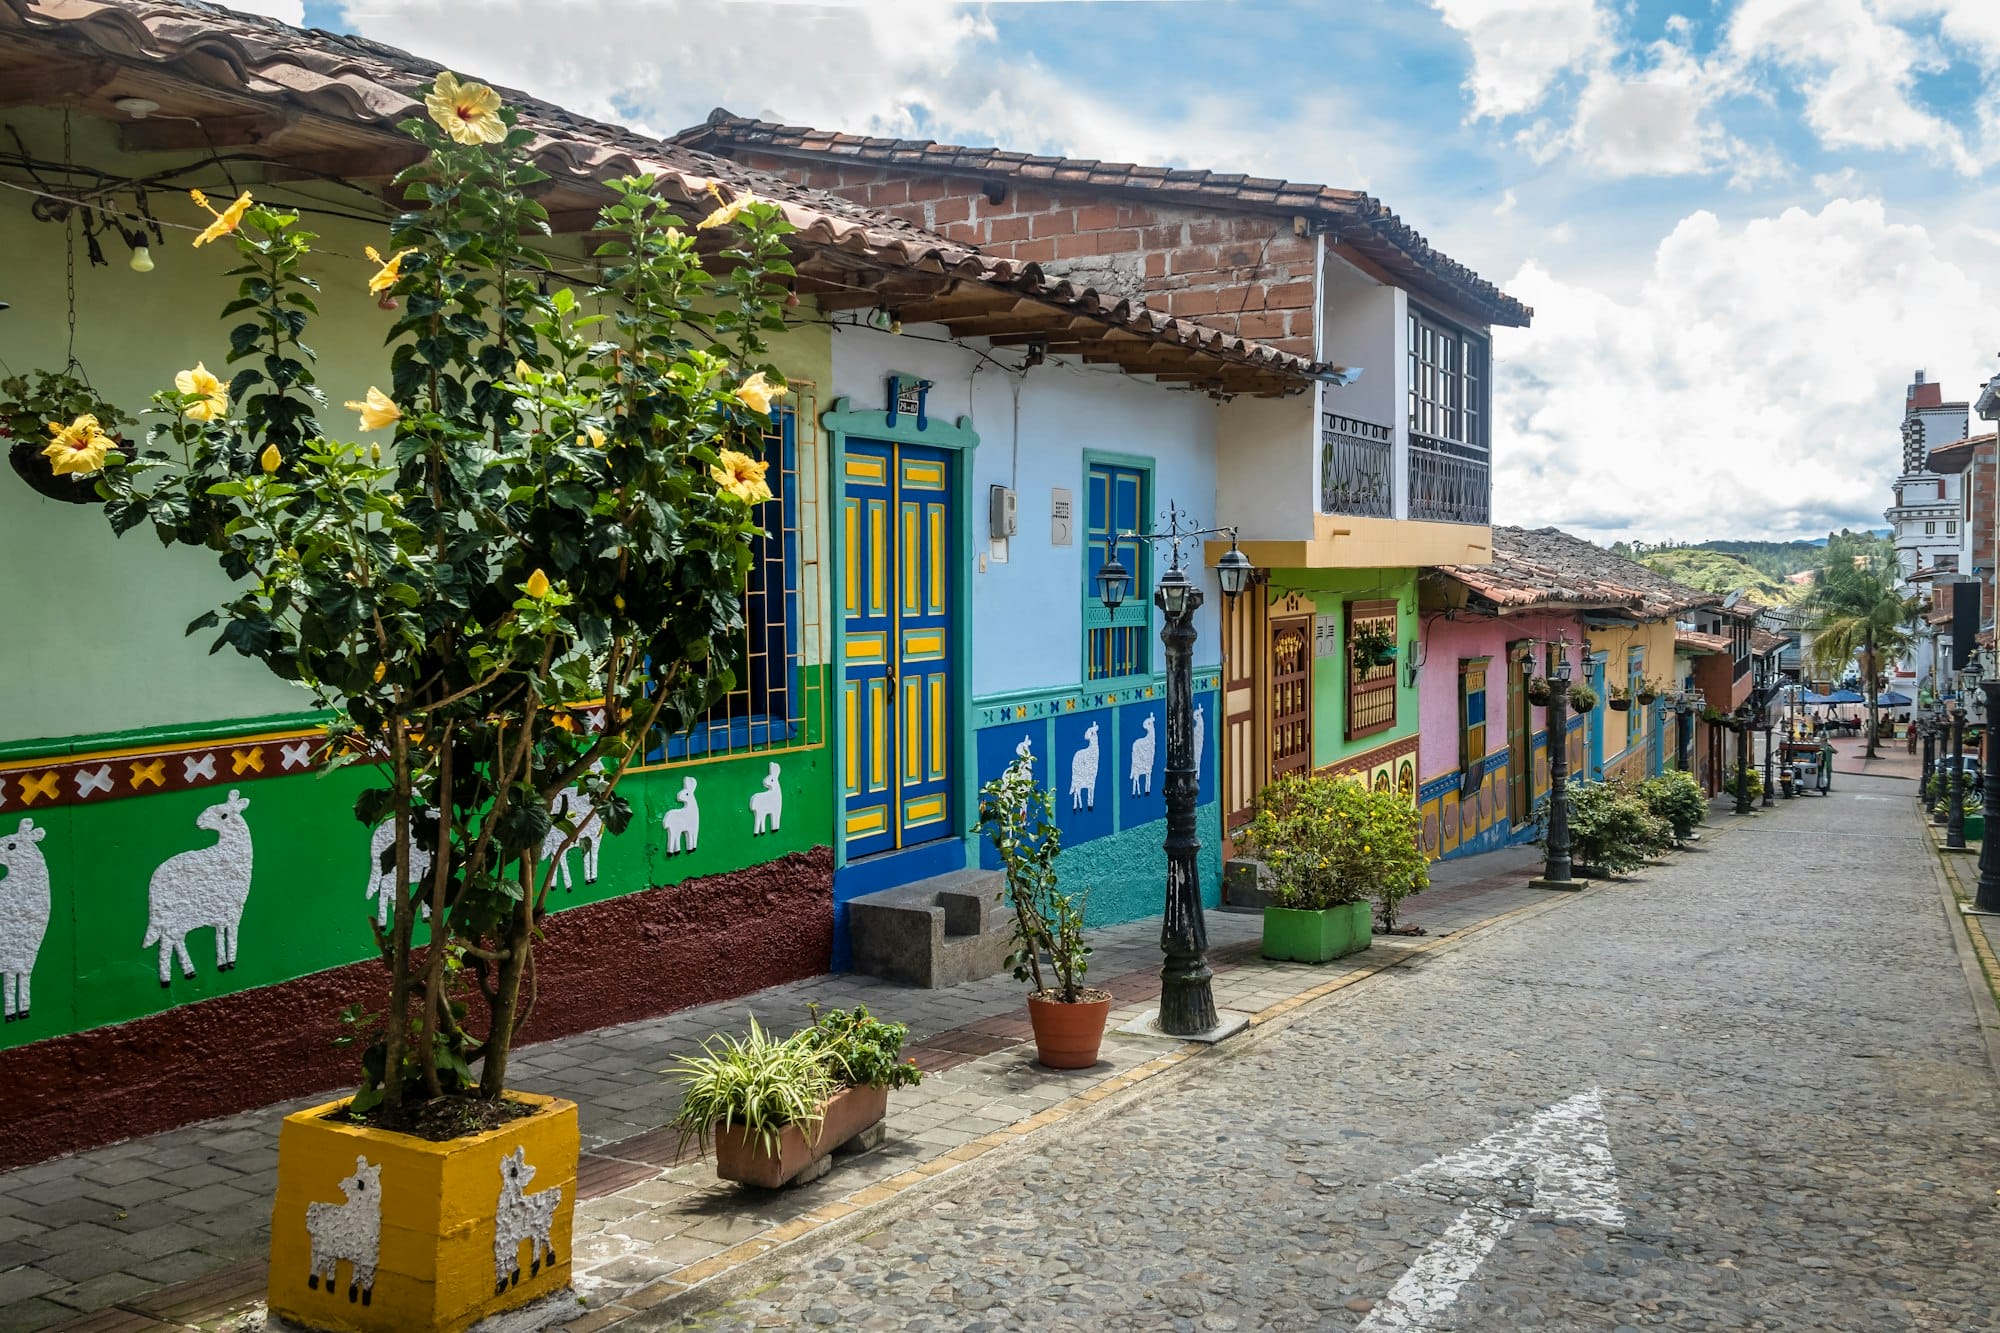 Colorful houses on a cobblestone street - Guatape, Antioquia, Colombia